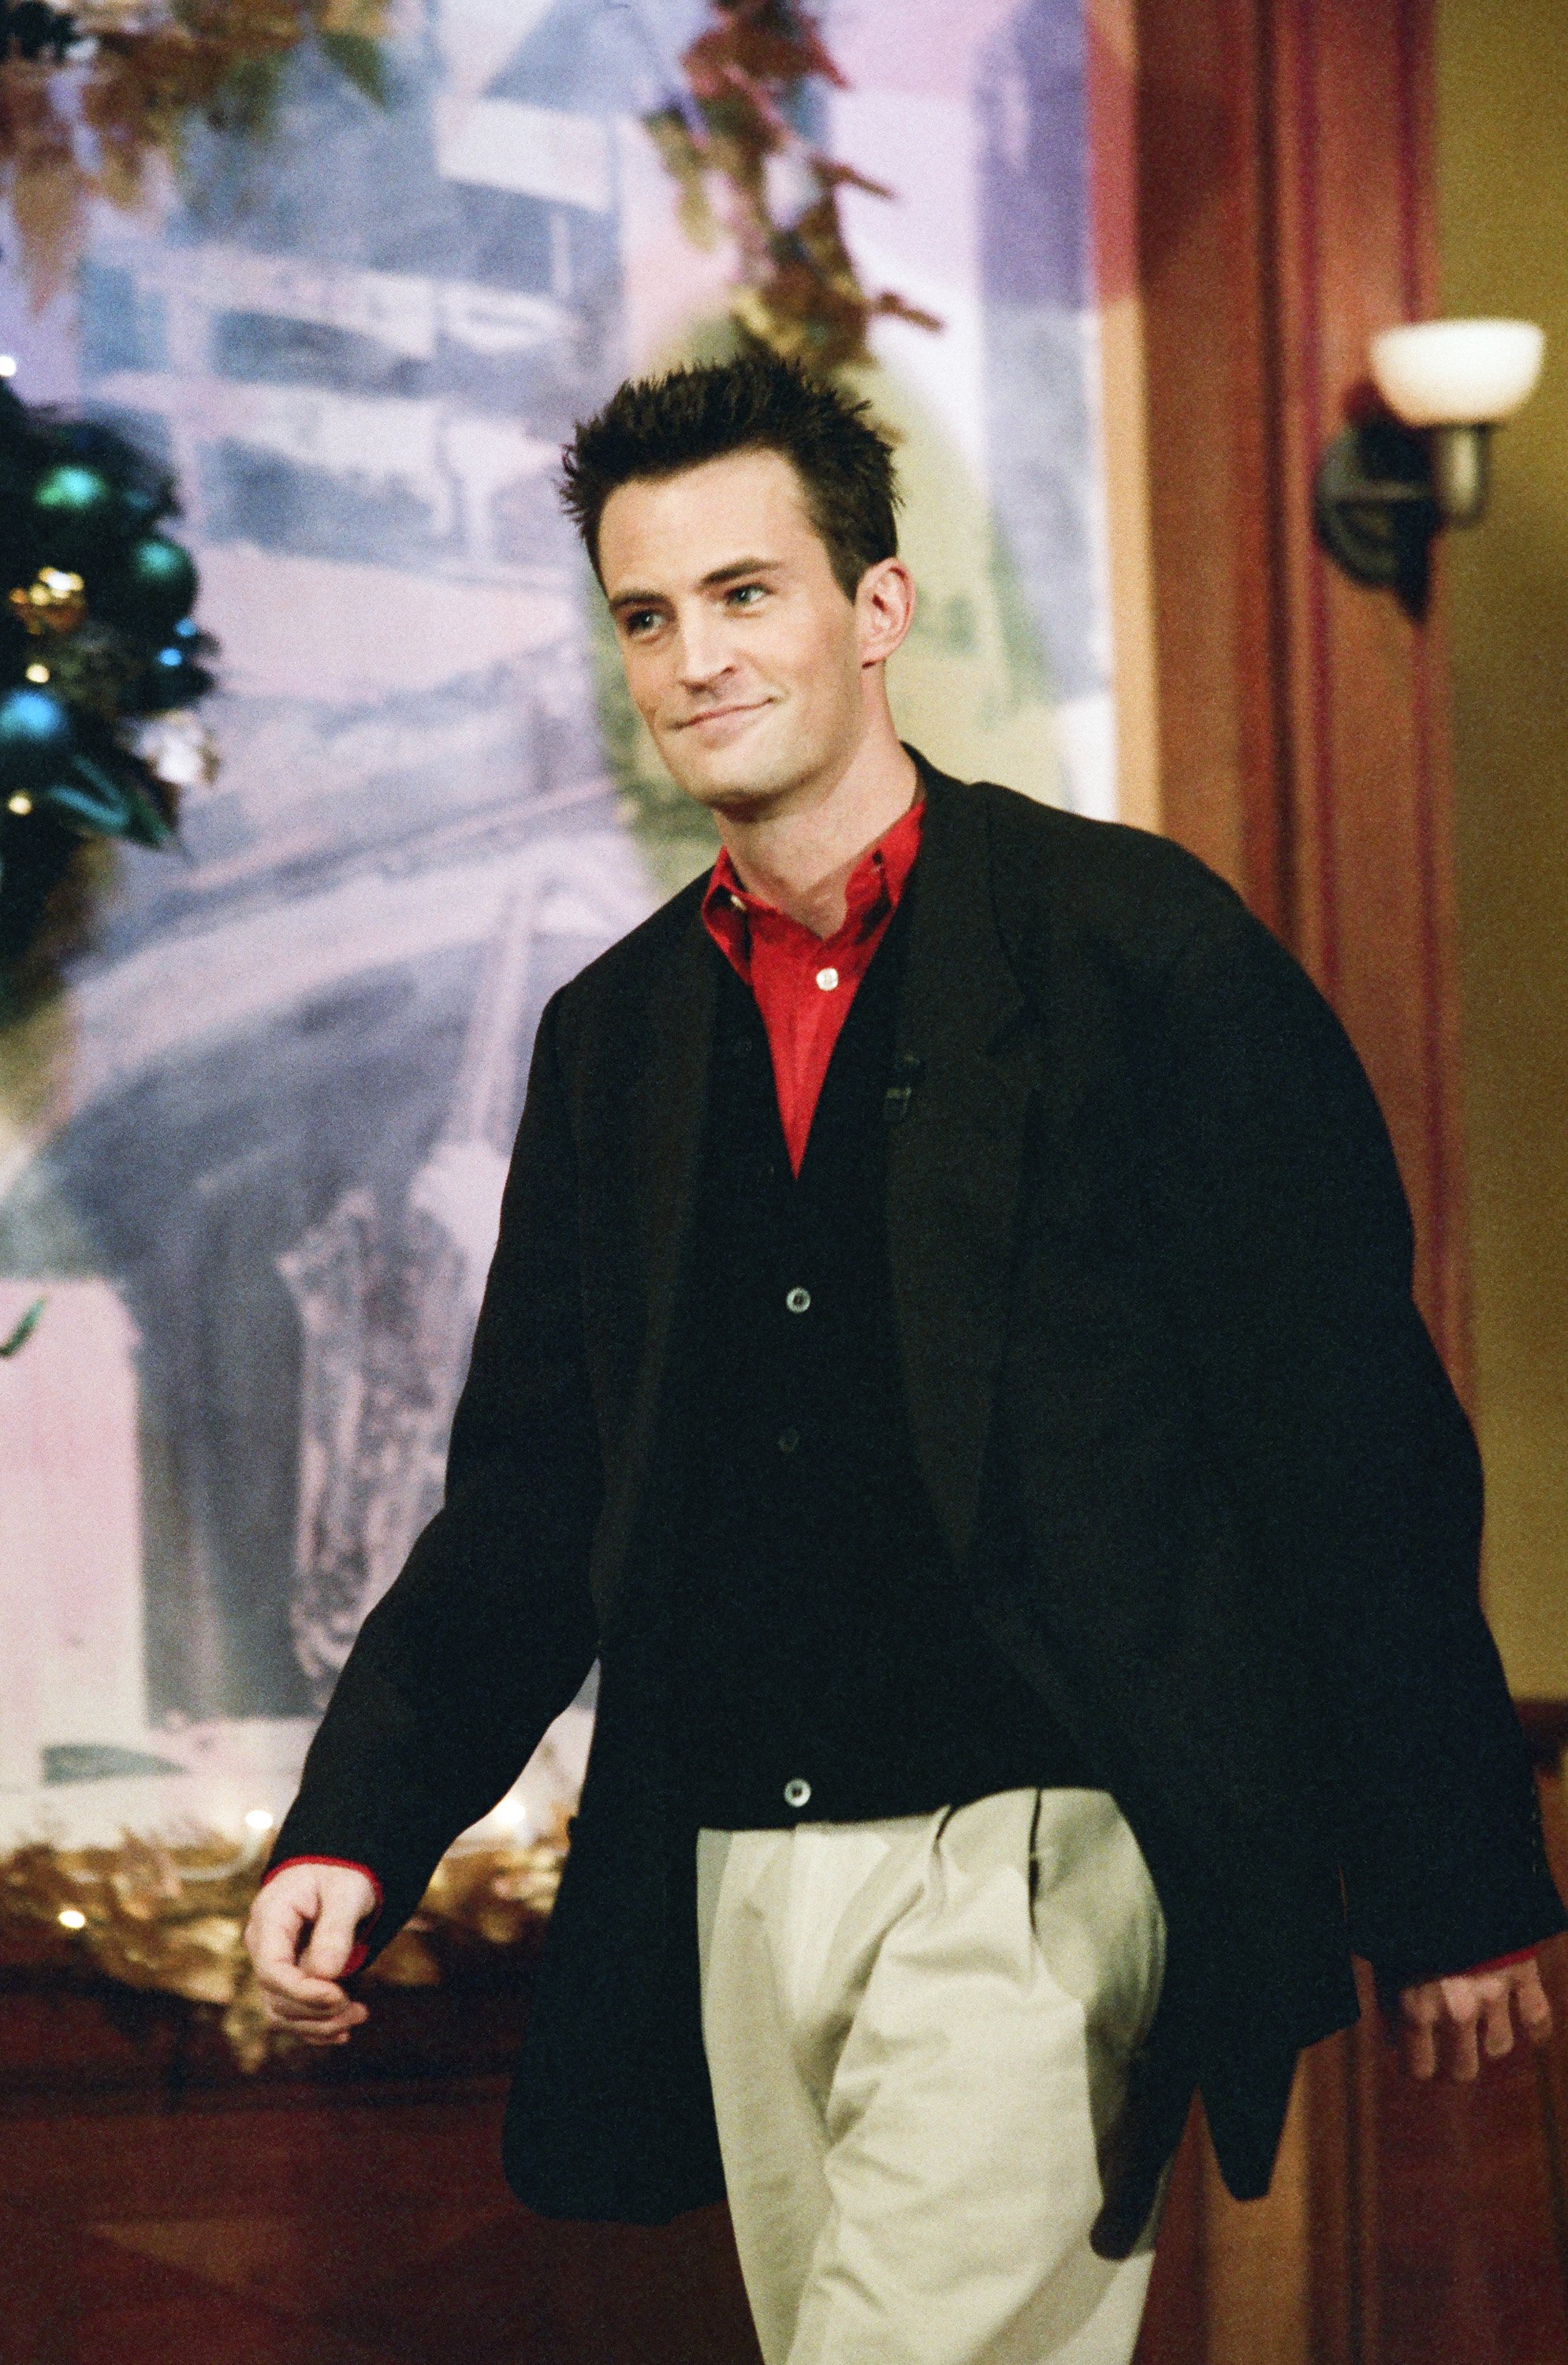 Matthew Perry lors d'une apparition au "Tonight Show with Jay Leno" le 18 décembre 1996 | Source : Getty Images